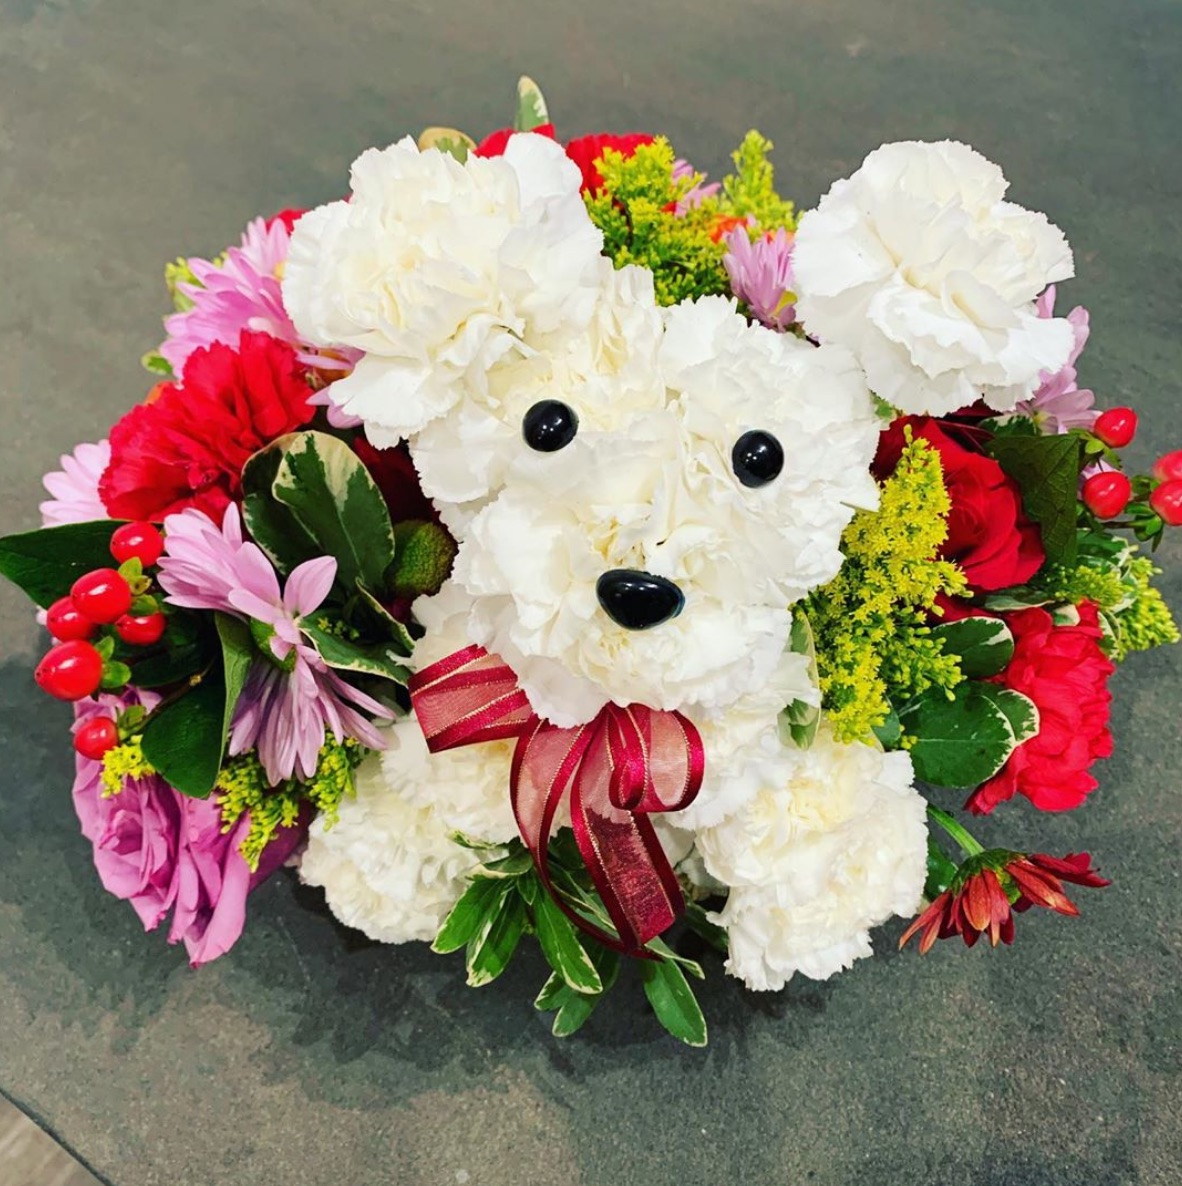 Simon Doonan's poodle floral display. Image courtesy of Doonan's Instagram